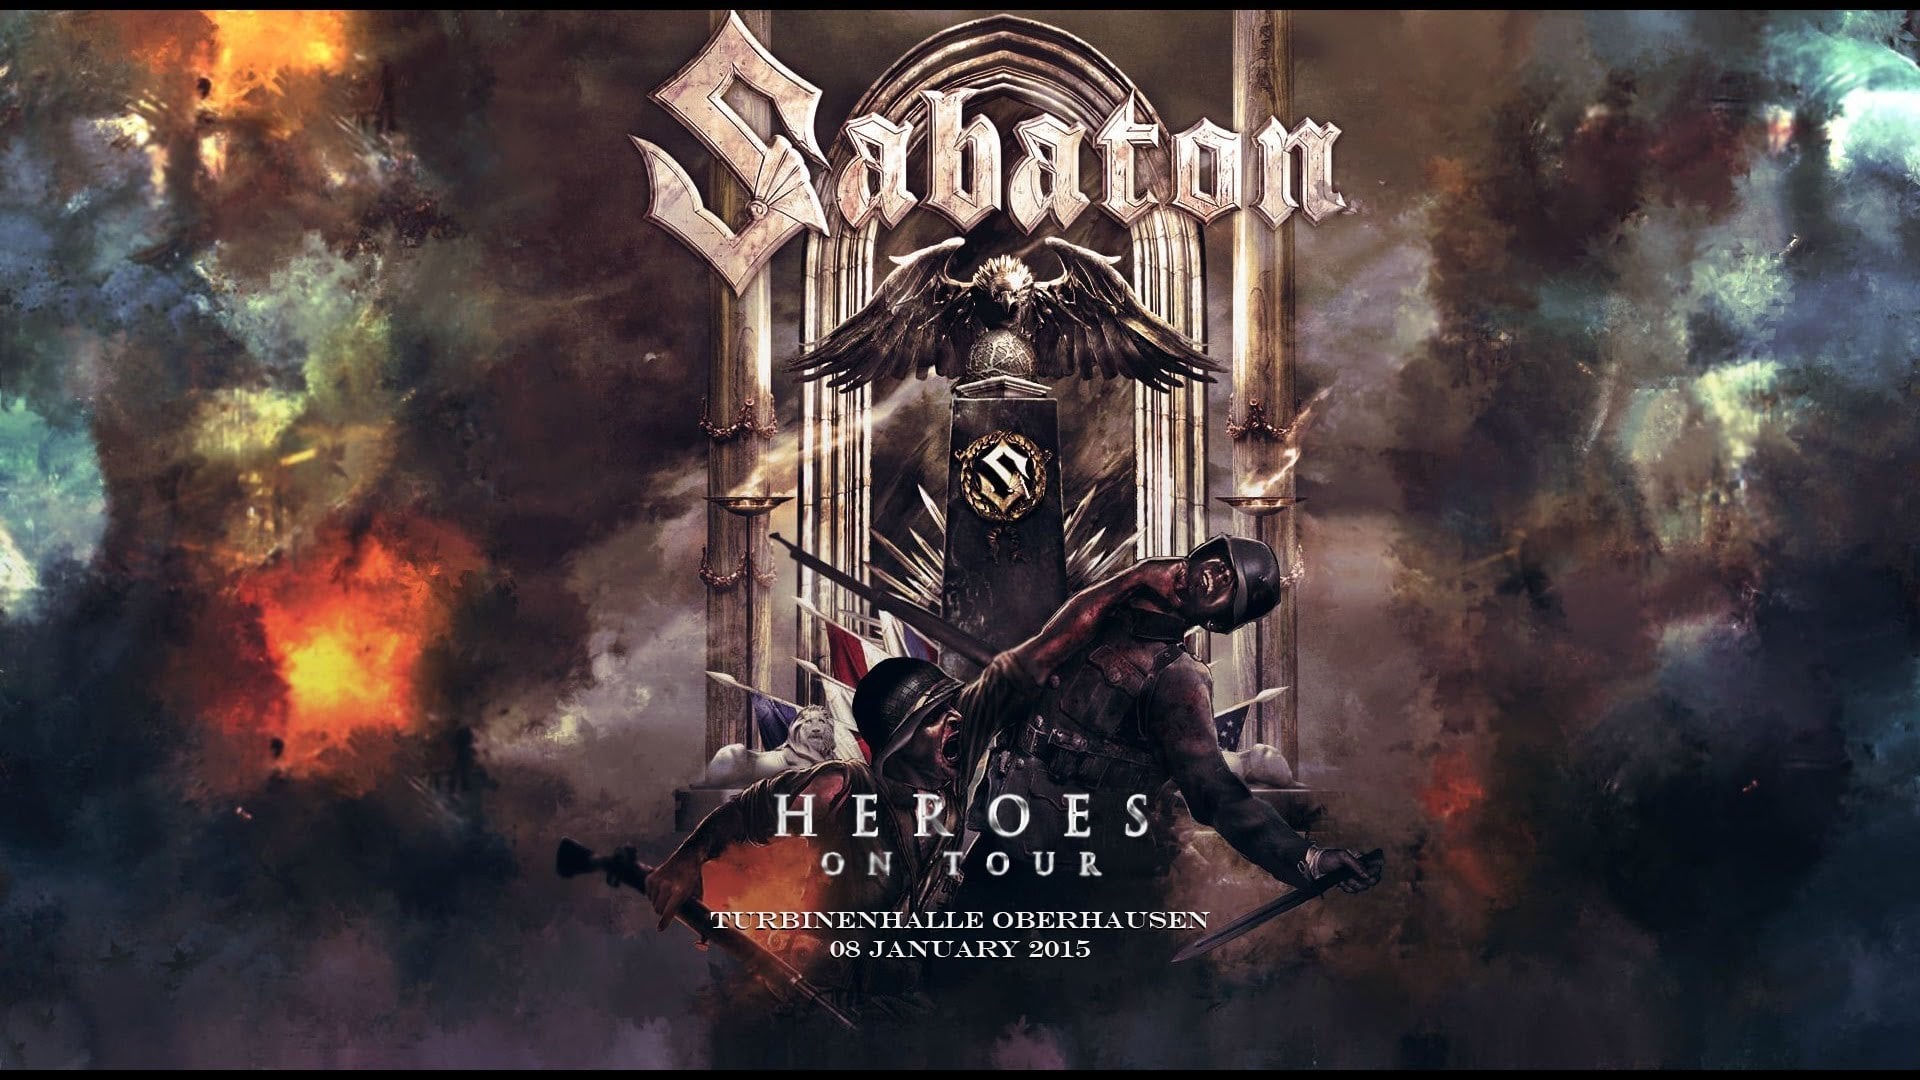 Sabaton - Heroes on tour (2016)